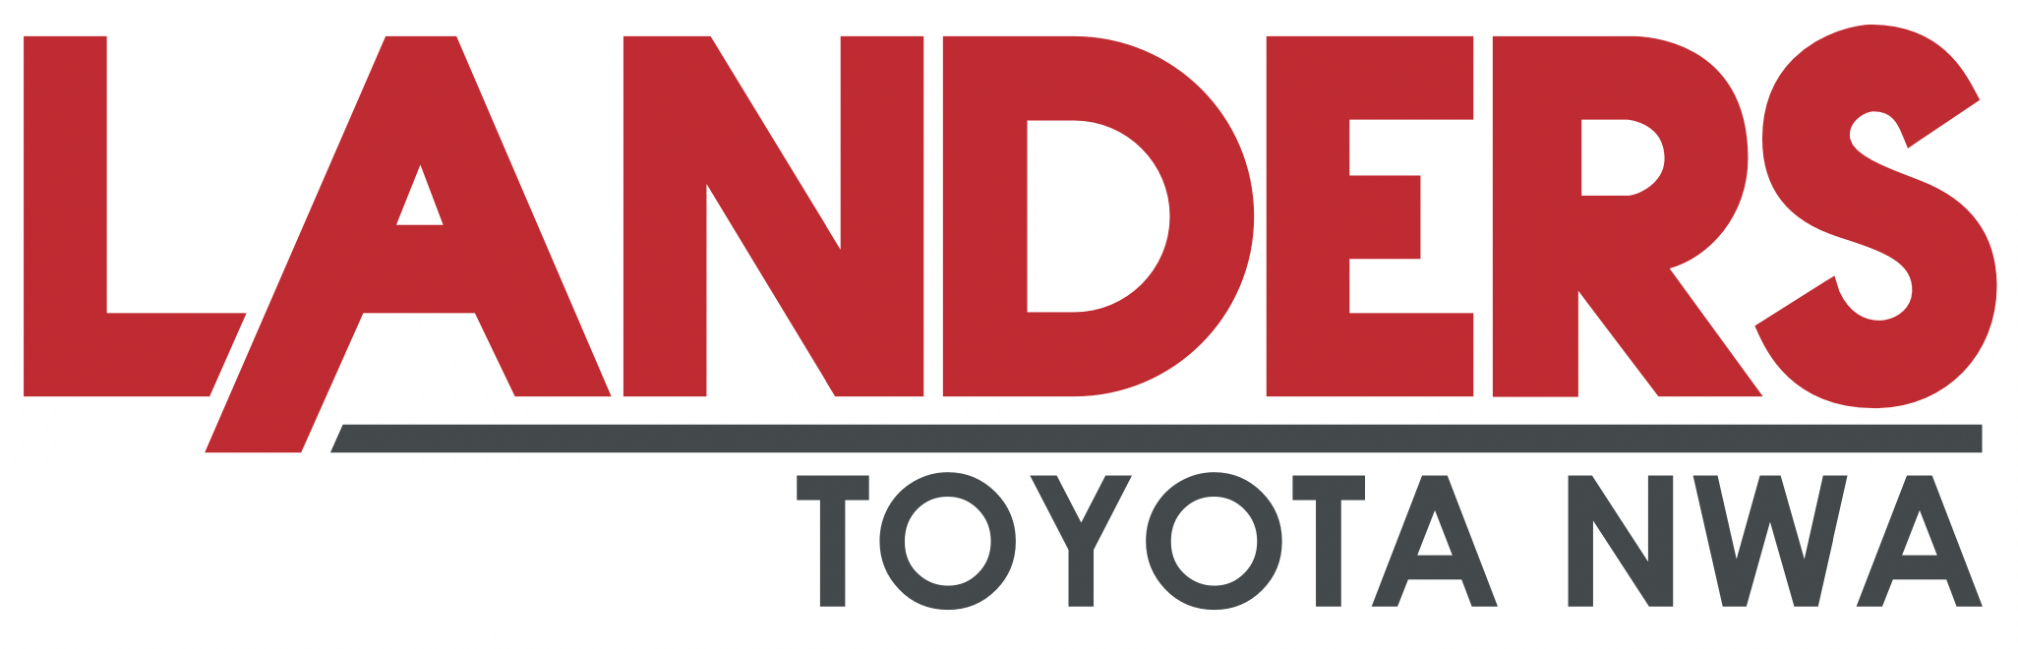 Landers Toyota